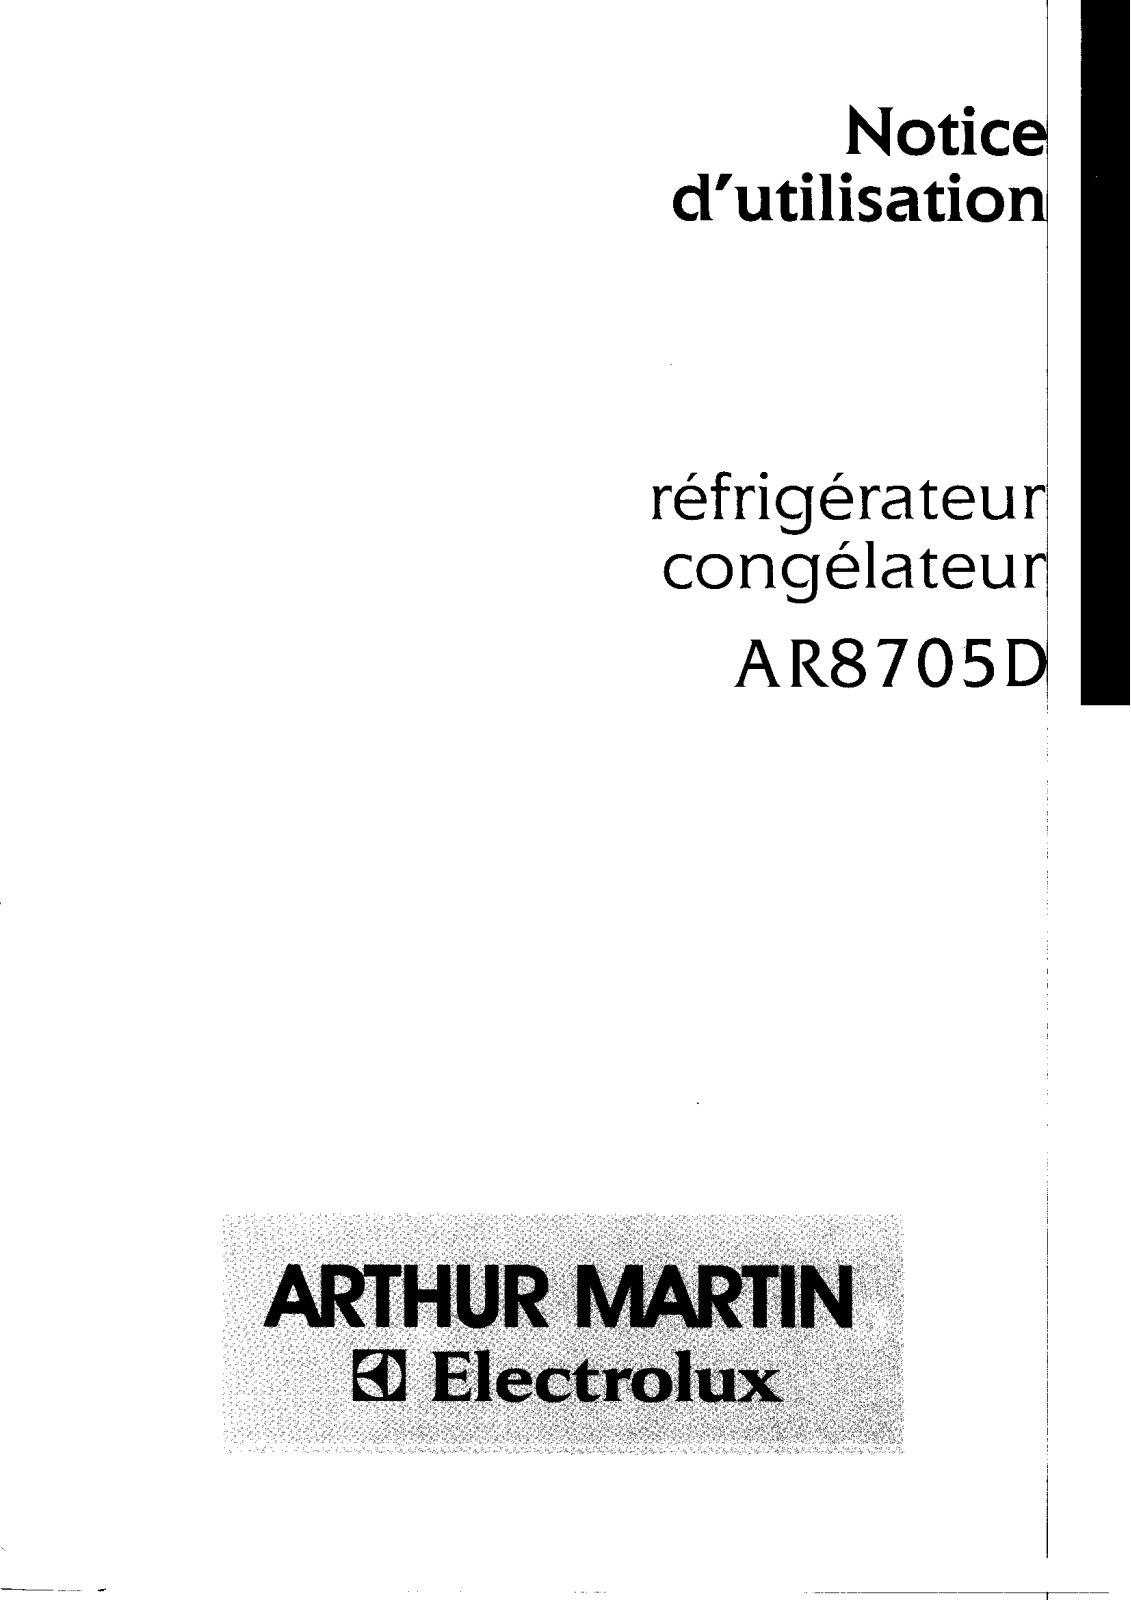 Arthur martin AR8705D User Manual